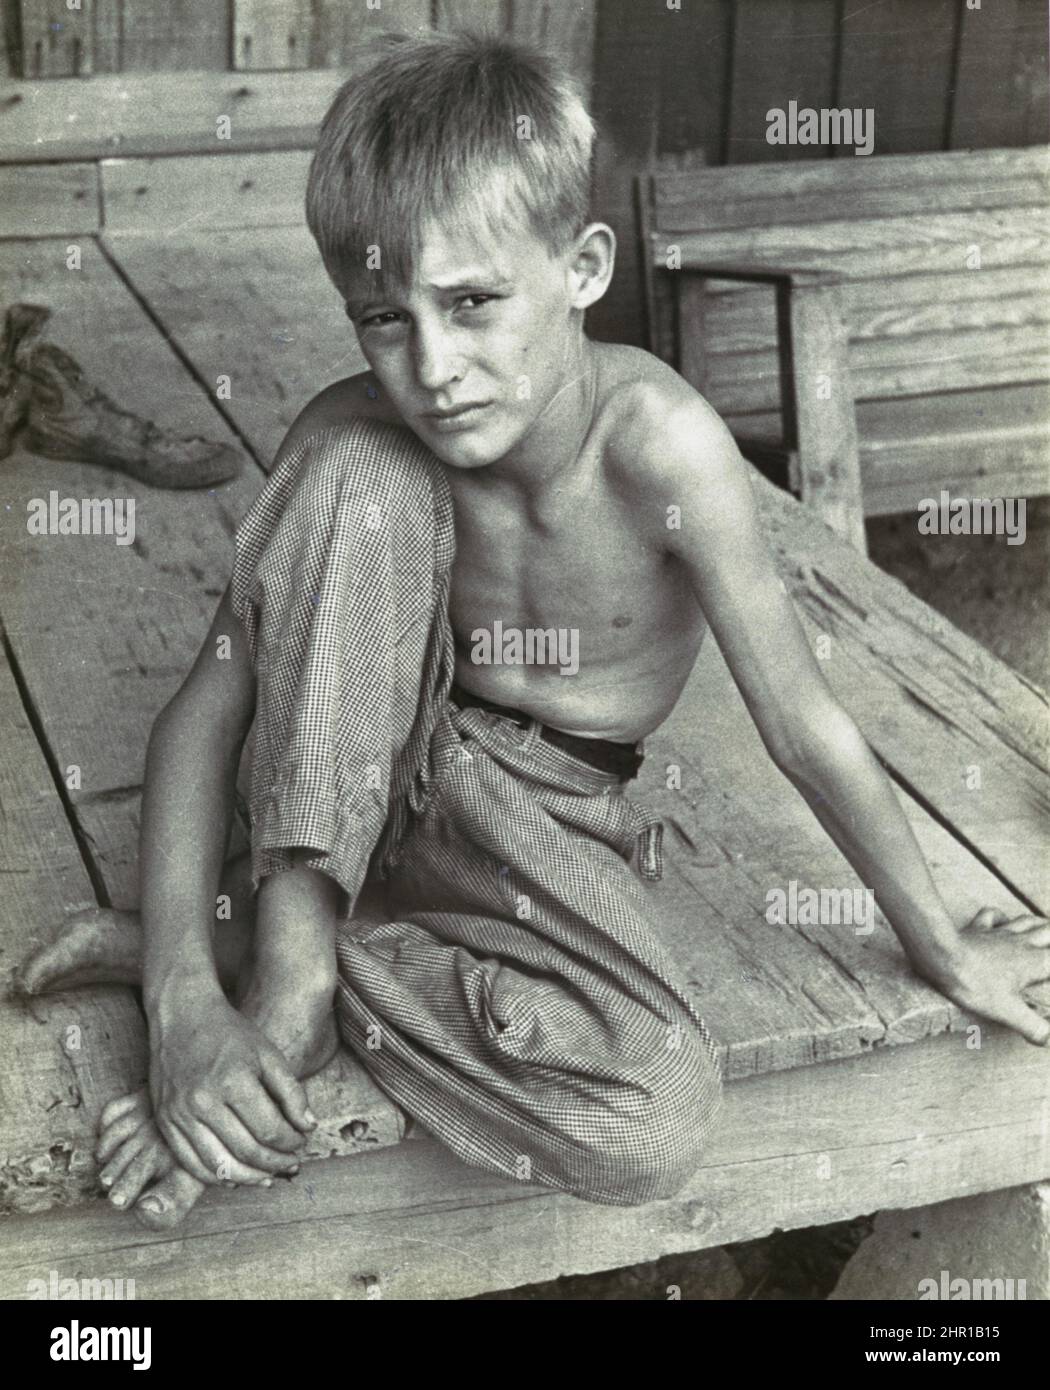 Arthur Rothstein - Son of Sharecropper - Mississippi Country, Arkansas, USA - 1935 Stock Photo